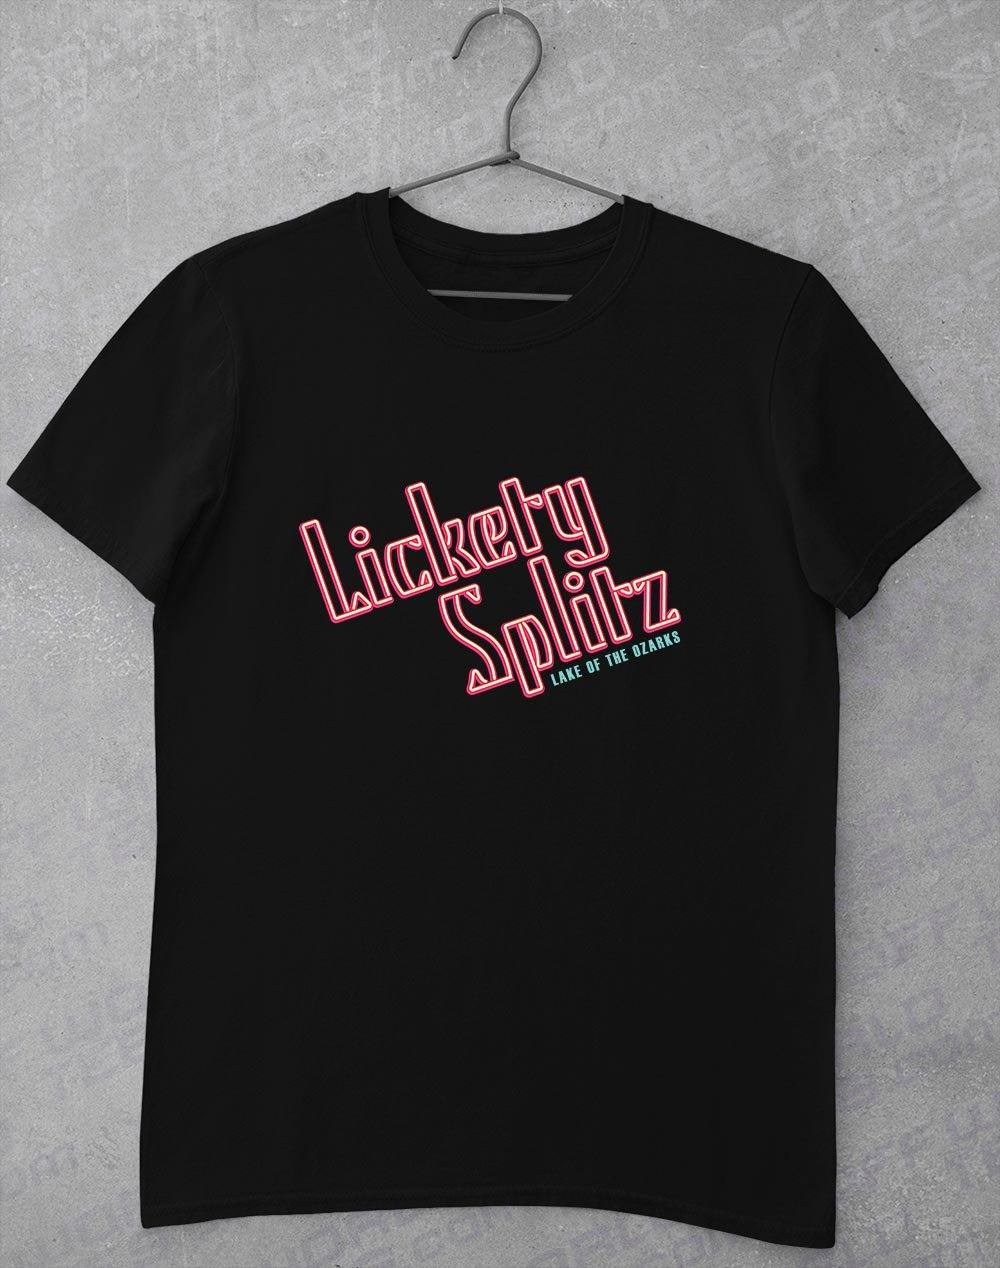 Lickety Splitz T-Shirt S / Black  - Off World Tees